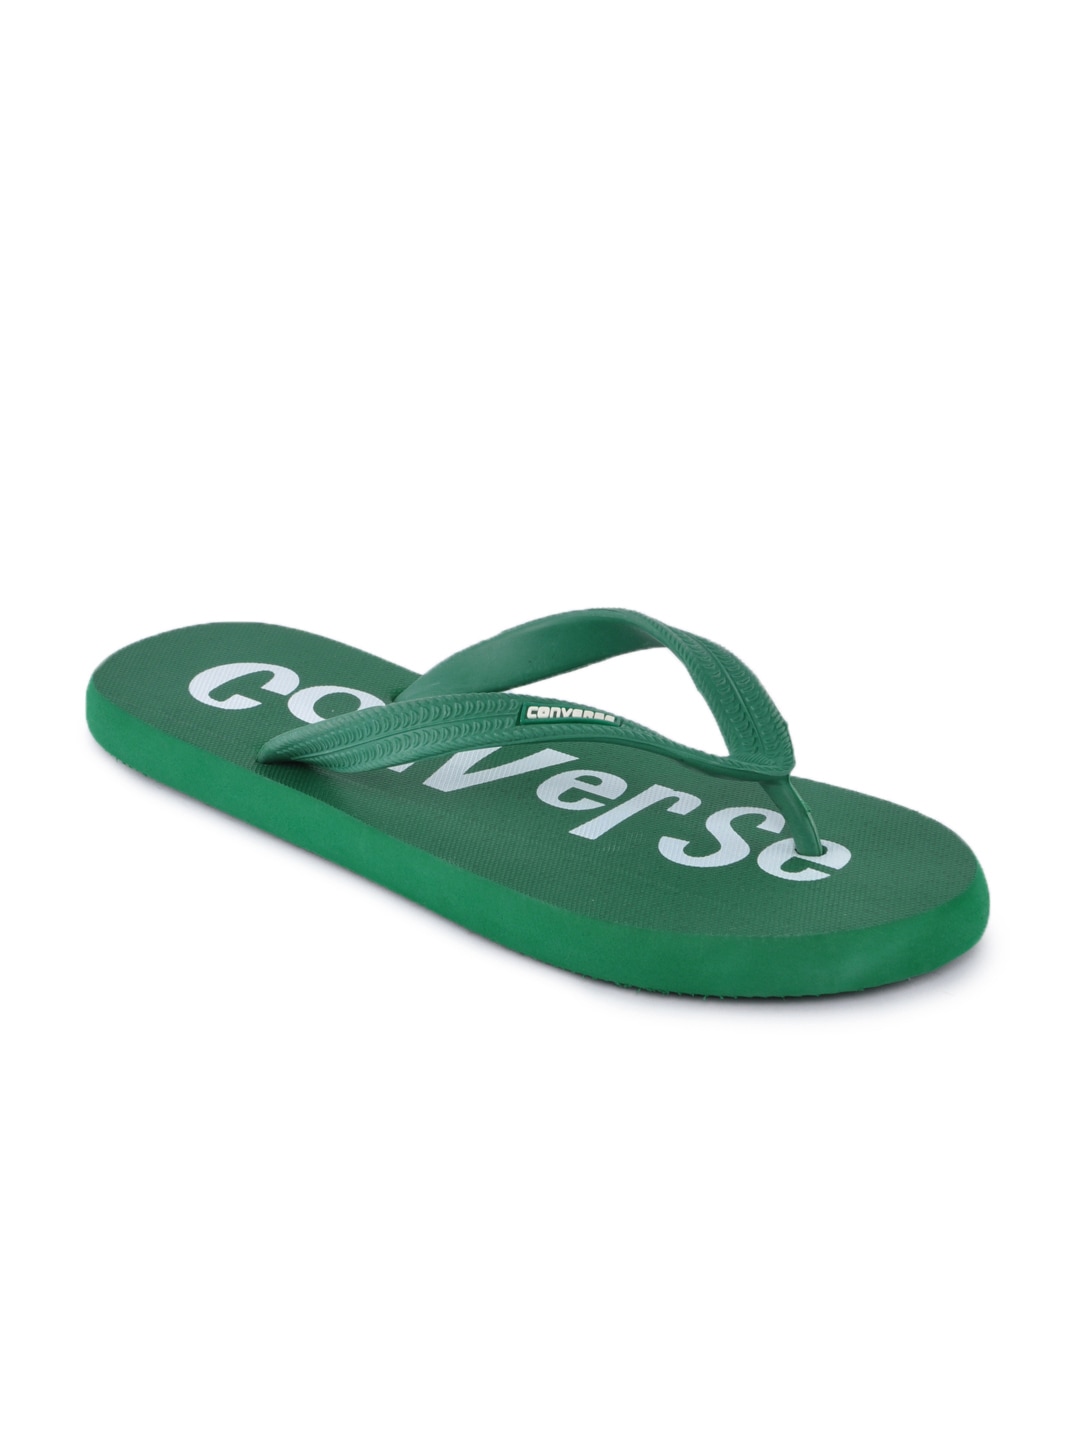 Converse Unisex Basic Green Flip Flops